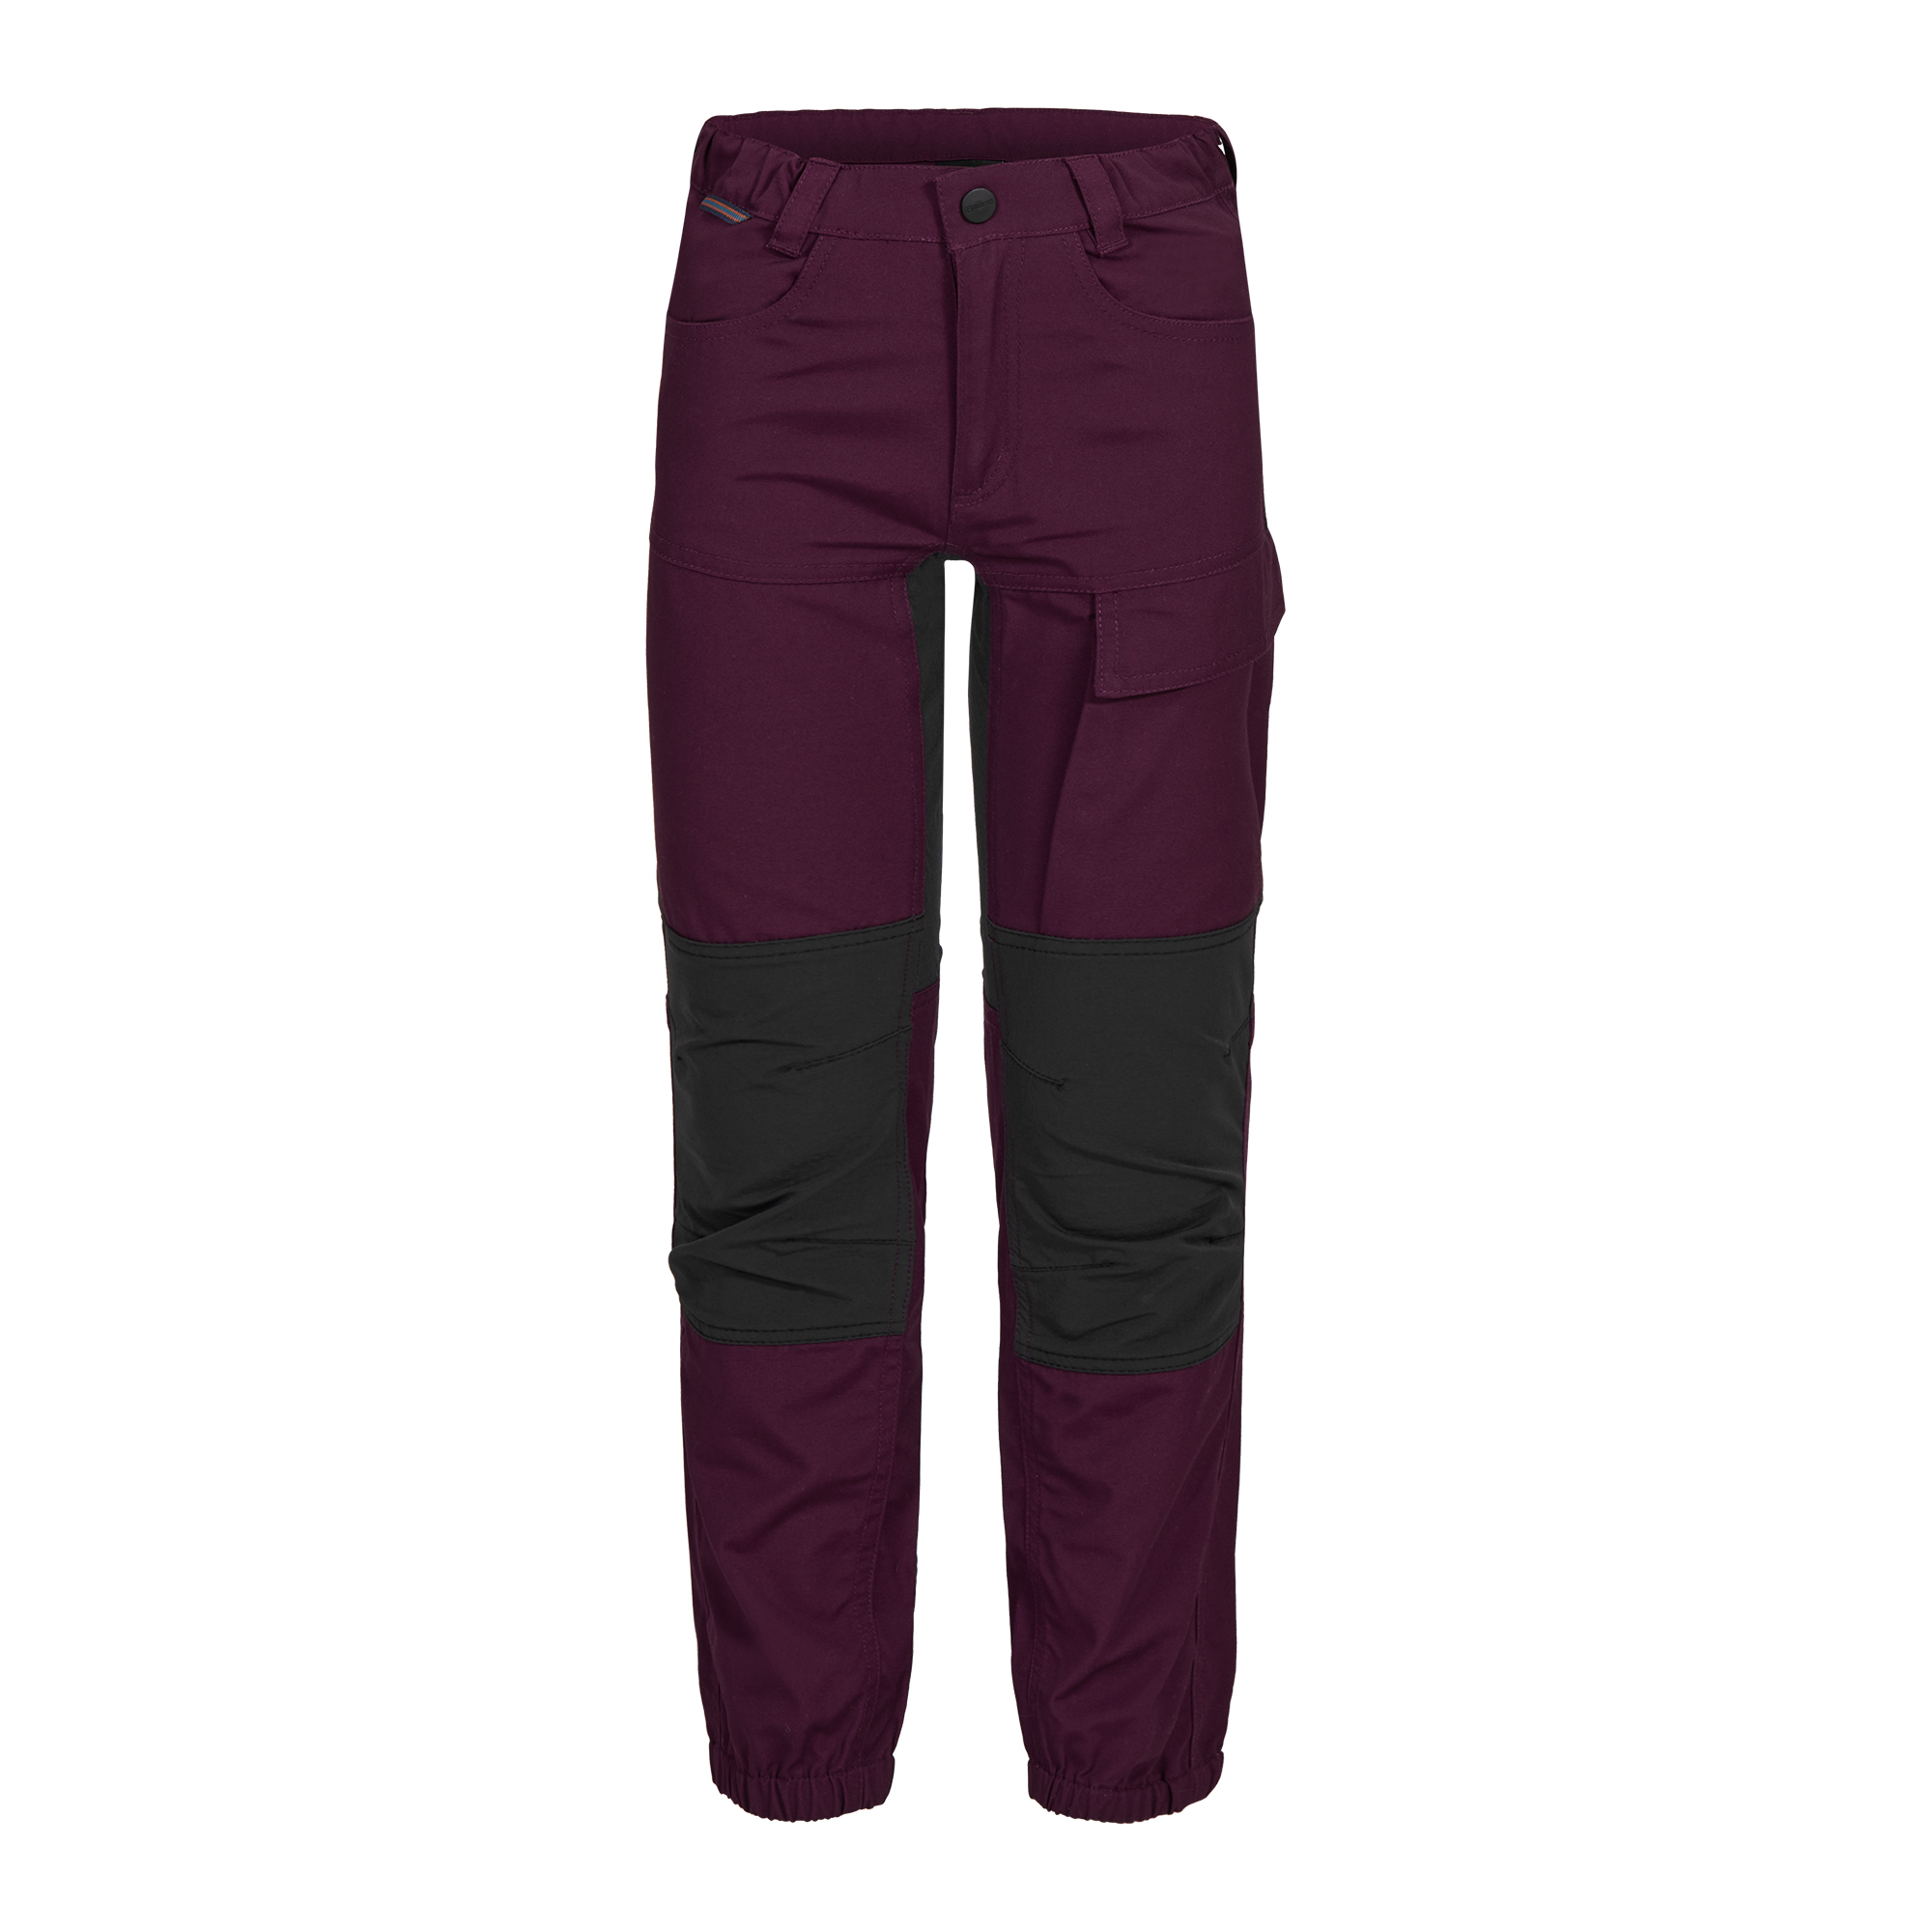 Naariy Purple Stretchable Cotton Pants for Women | Everyday Wear